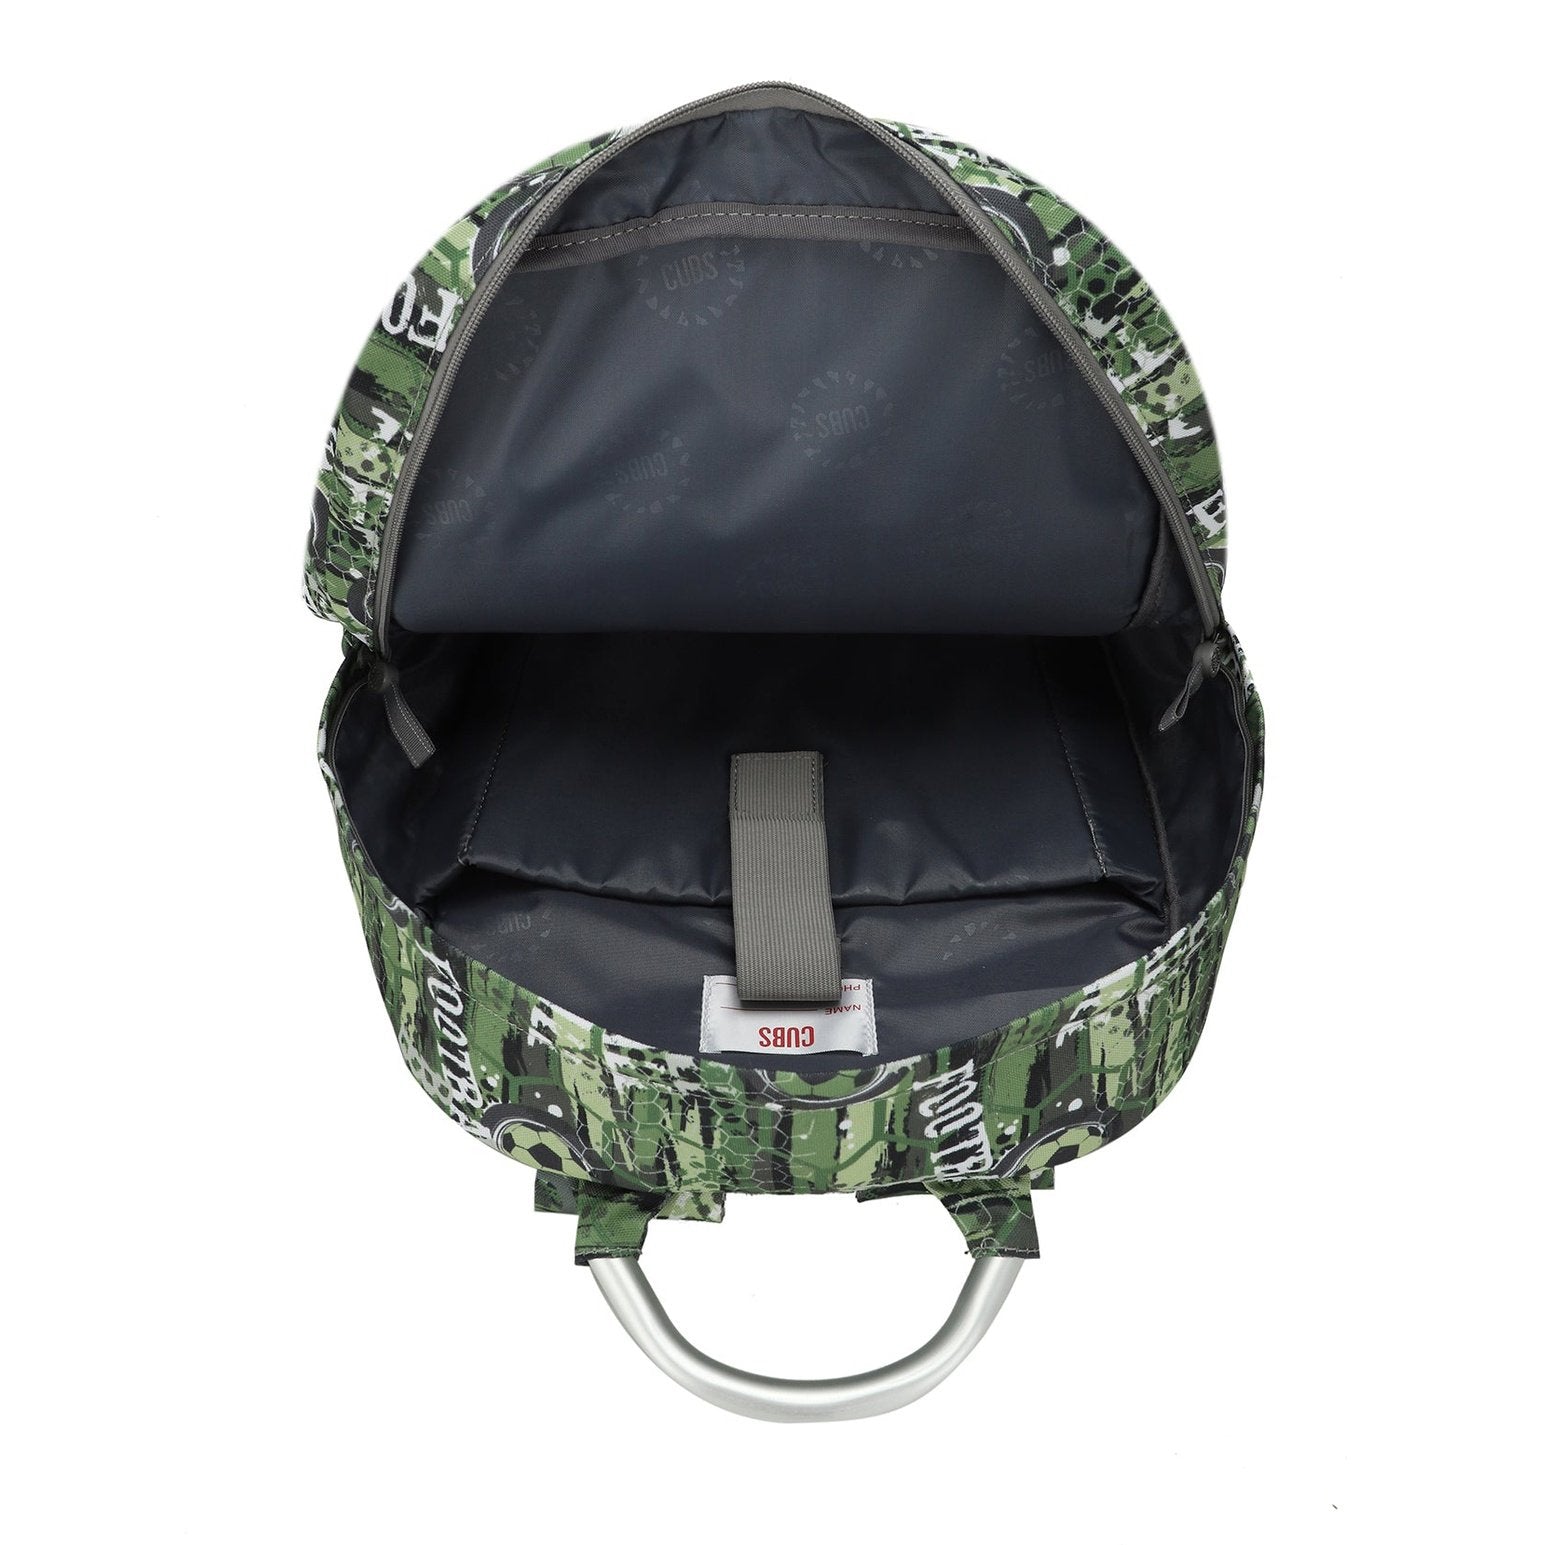 Army Green Football Backpack